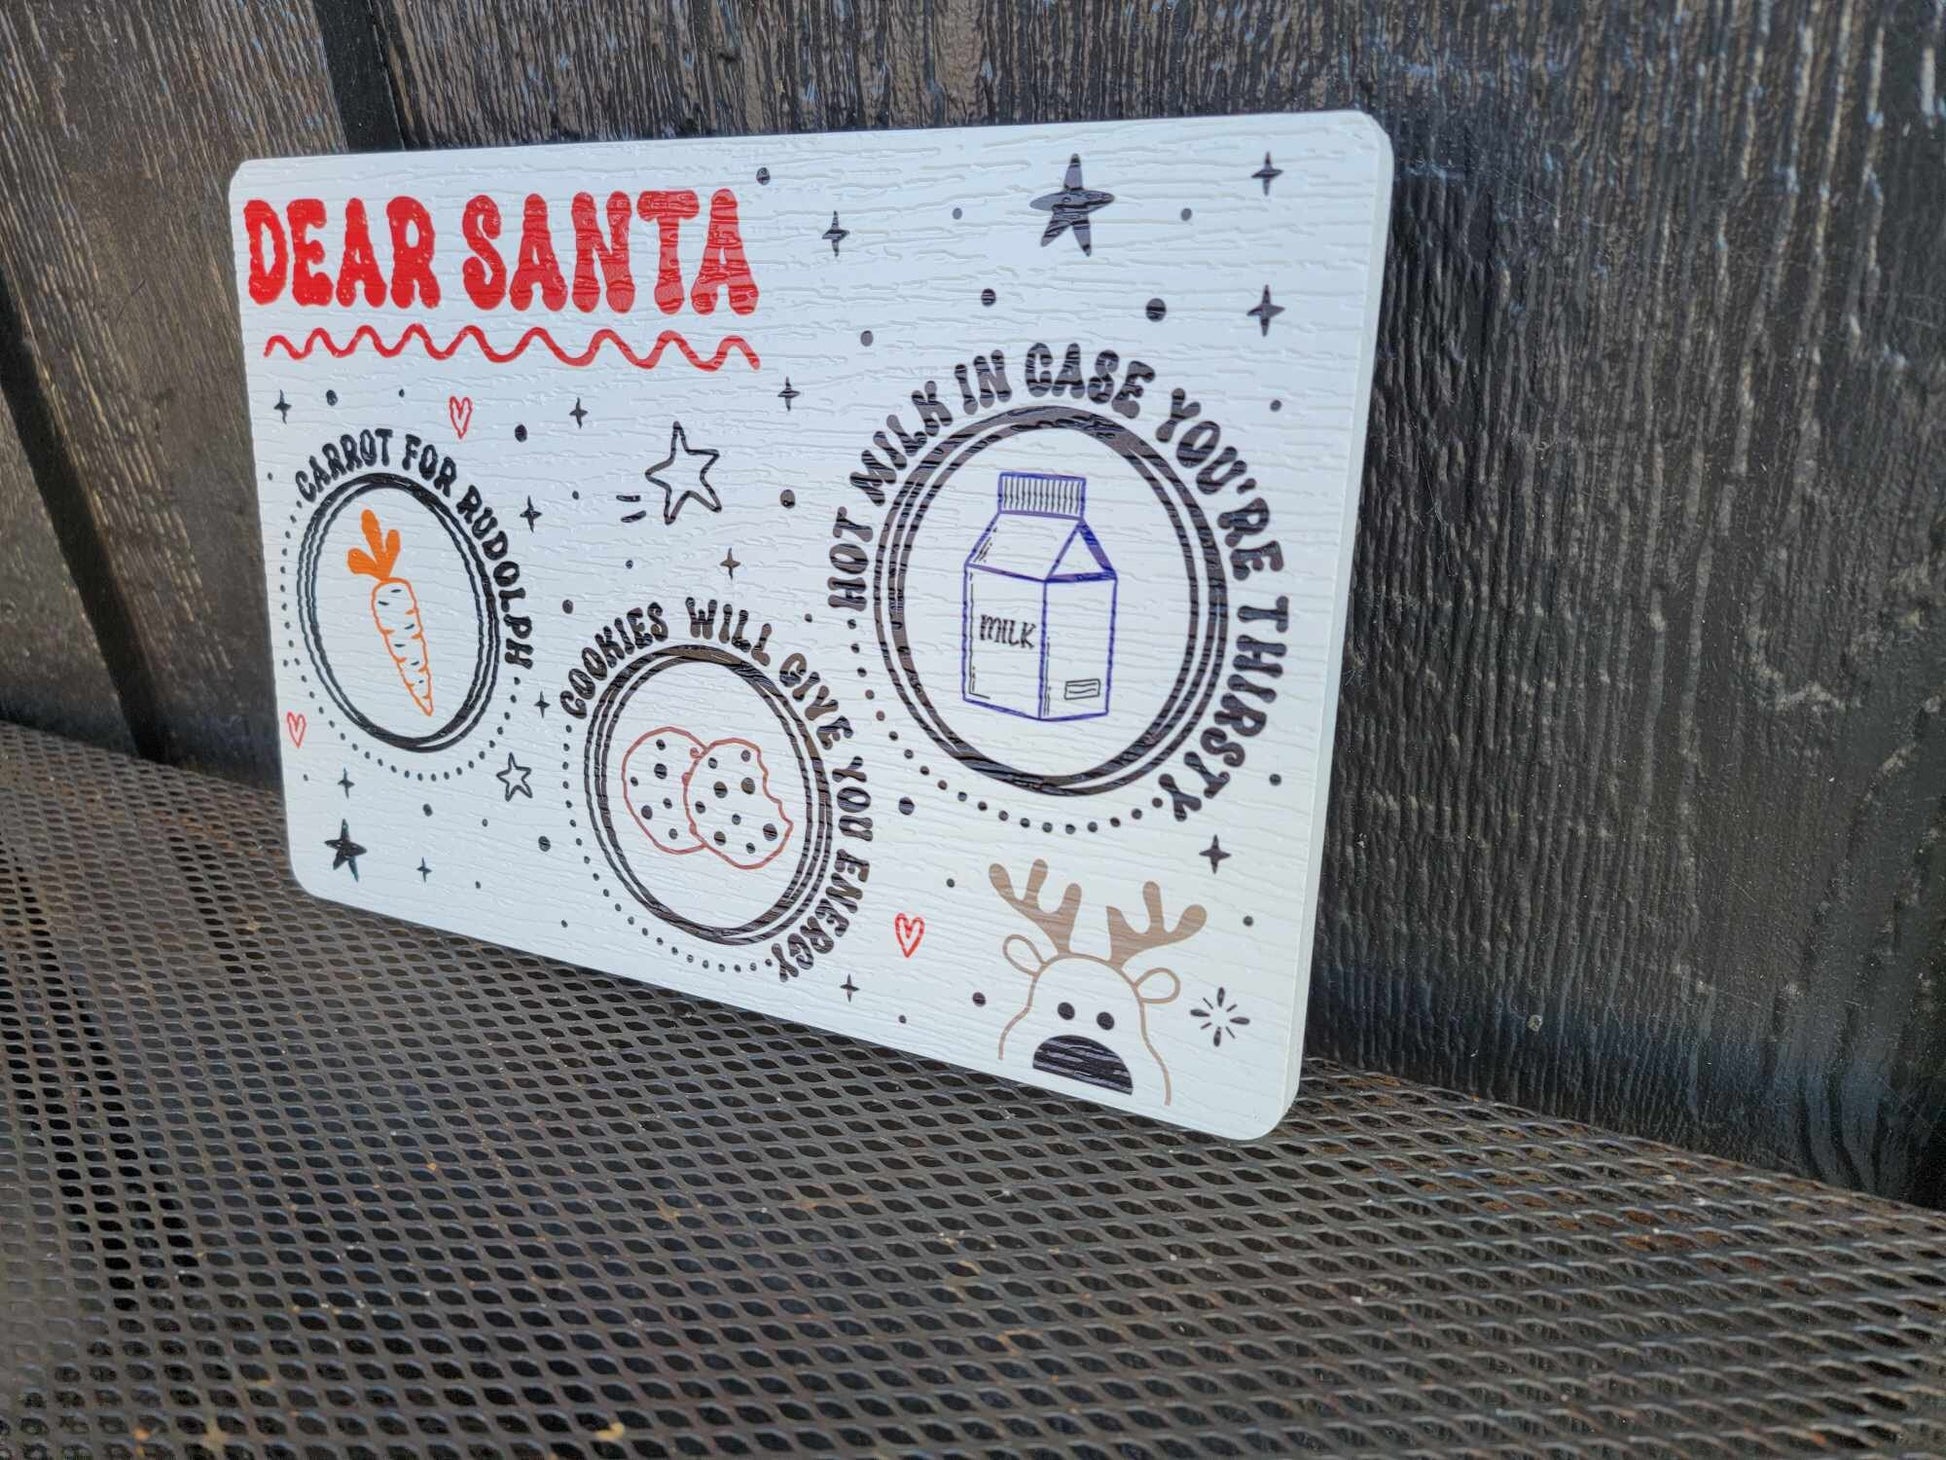 Dear Santa Tray Cookies Milk Reindeer Carrot PVC Printed Christmas Day Treat Gift Snack Plate Leave for Santa